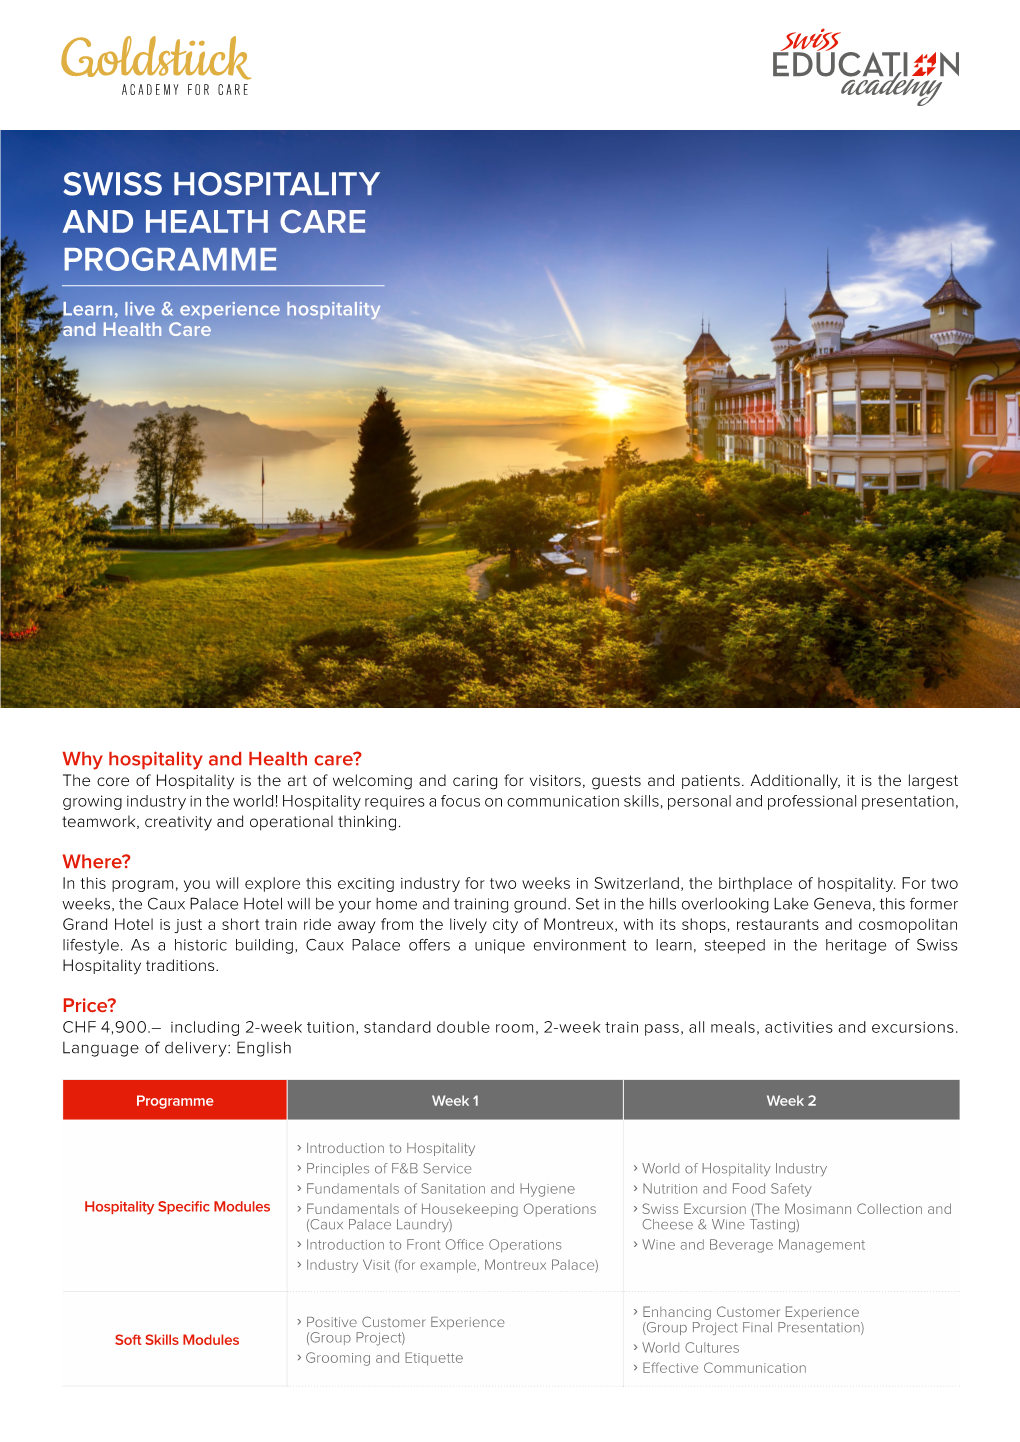 SWISS HOSPITALITY and HEALTH CARE PROGRAMME Learn, Live & Experience Hospitality and Health Care